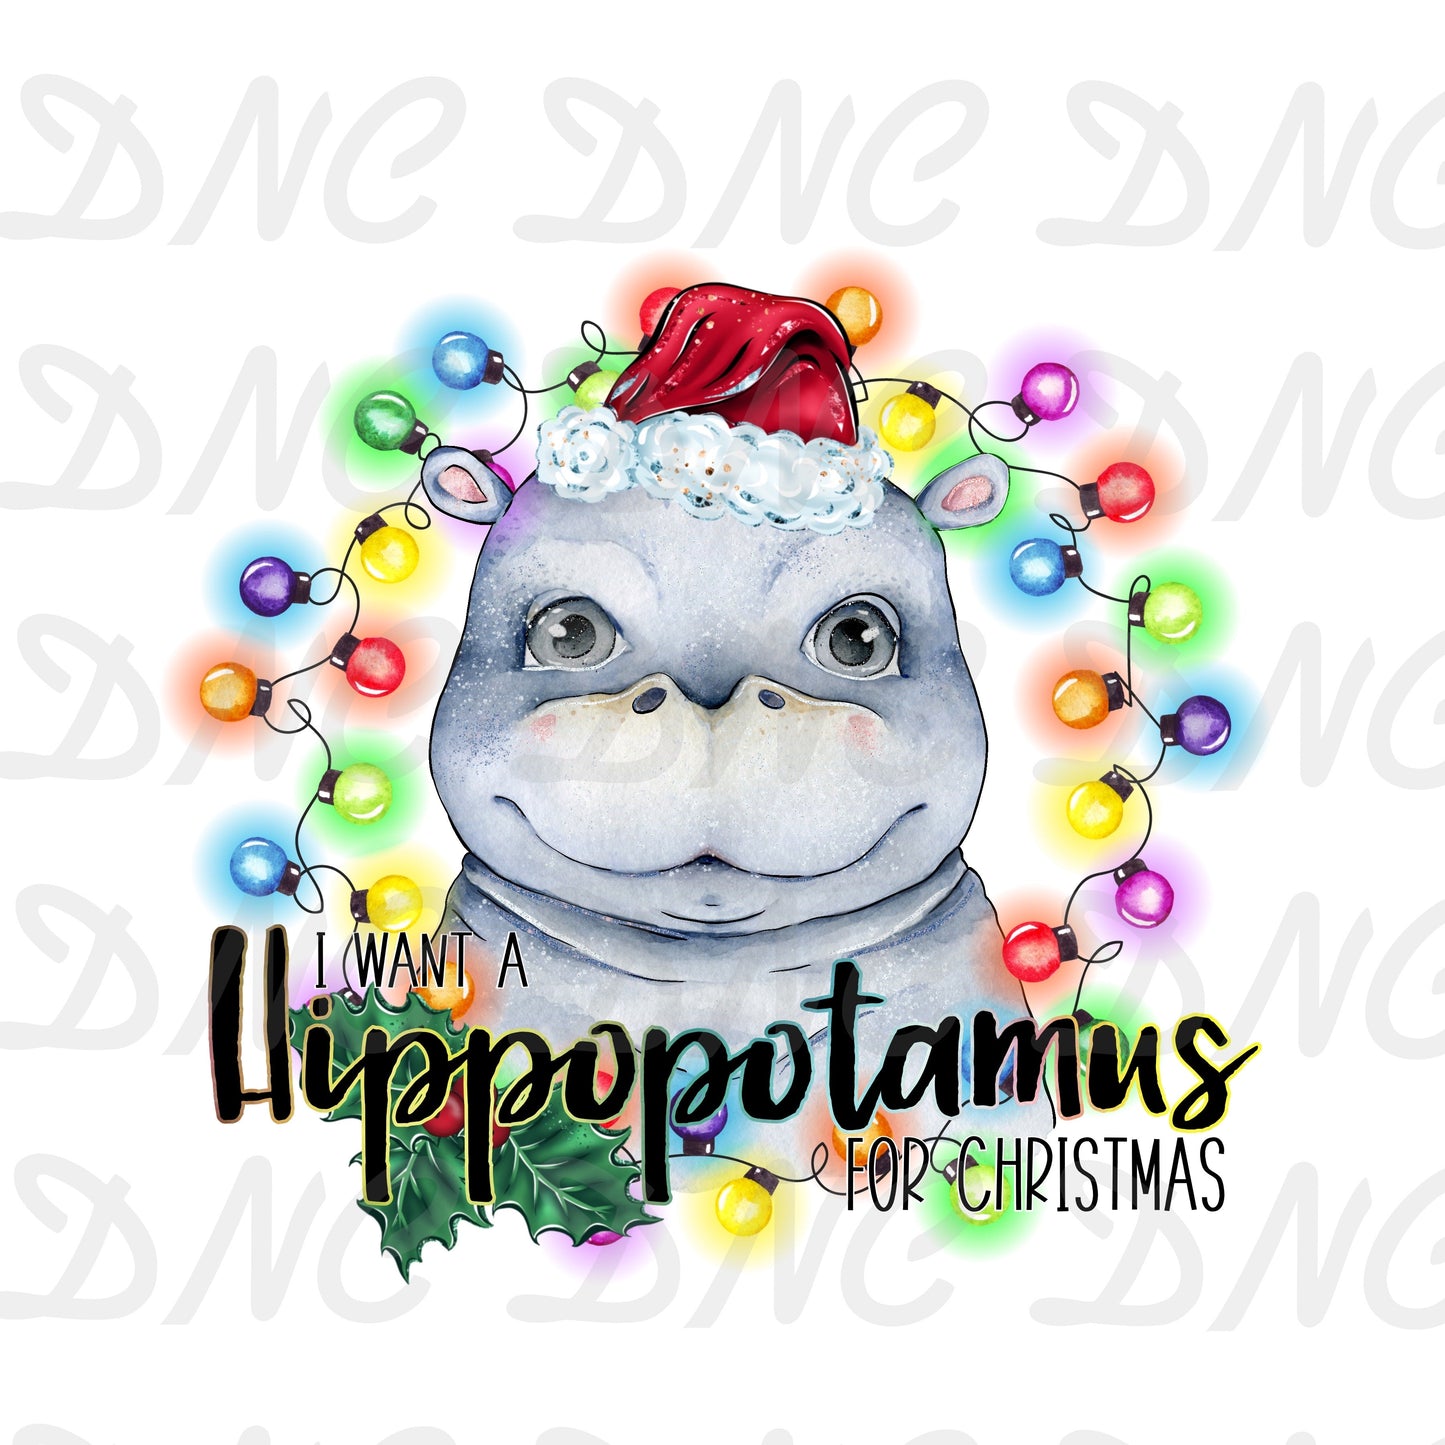 Hippopotamus for christmas no teeth - Sublimation